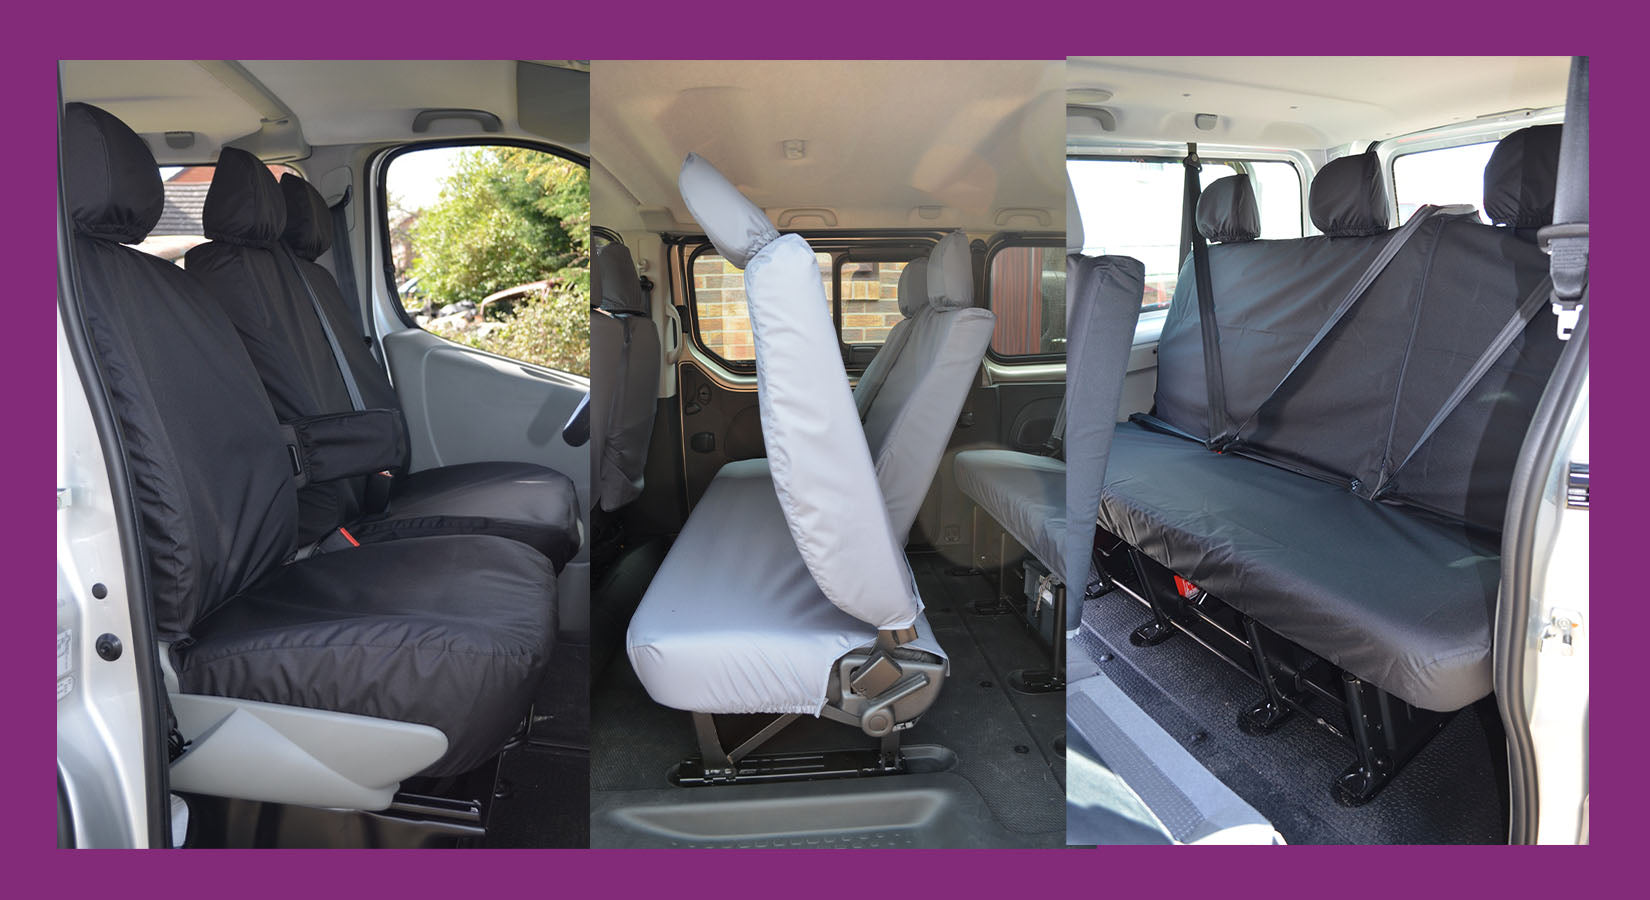 New product: Vauxhall Vivaro Combi 2001-2006 & 2006-2014 Seat Covers